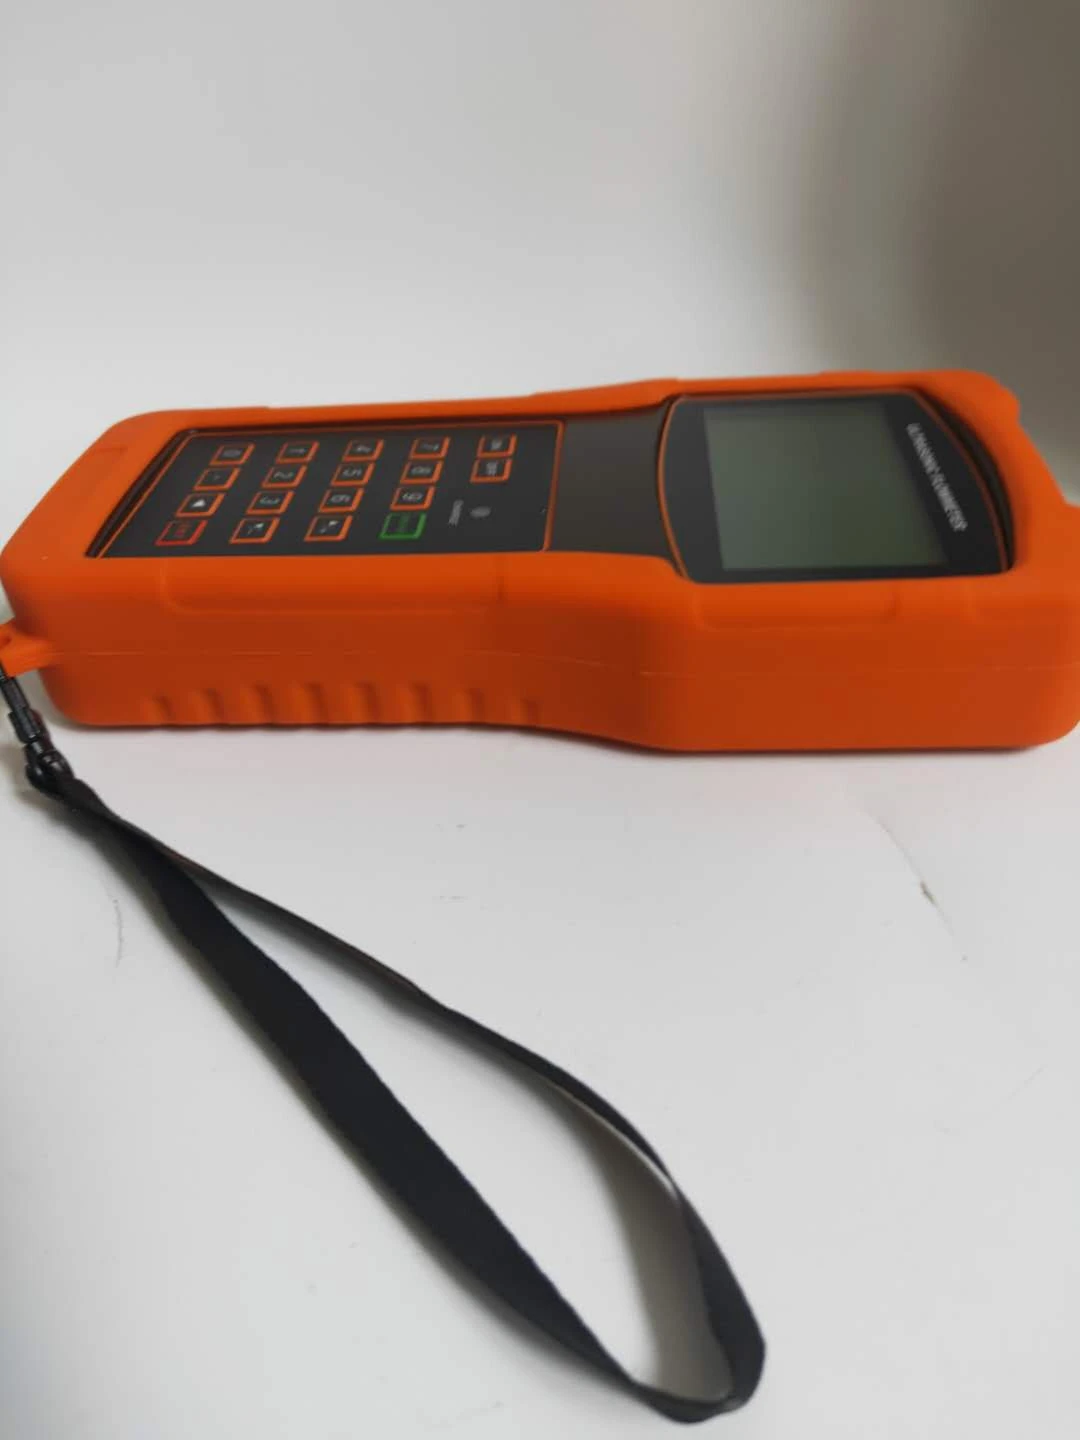 485 Communication Handheld ultrasonic flow meter portable water meter